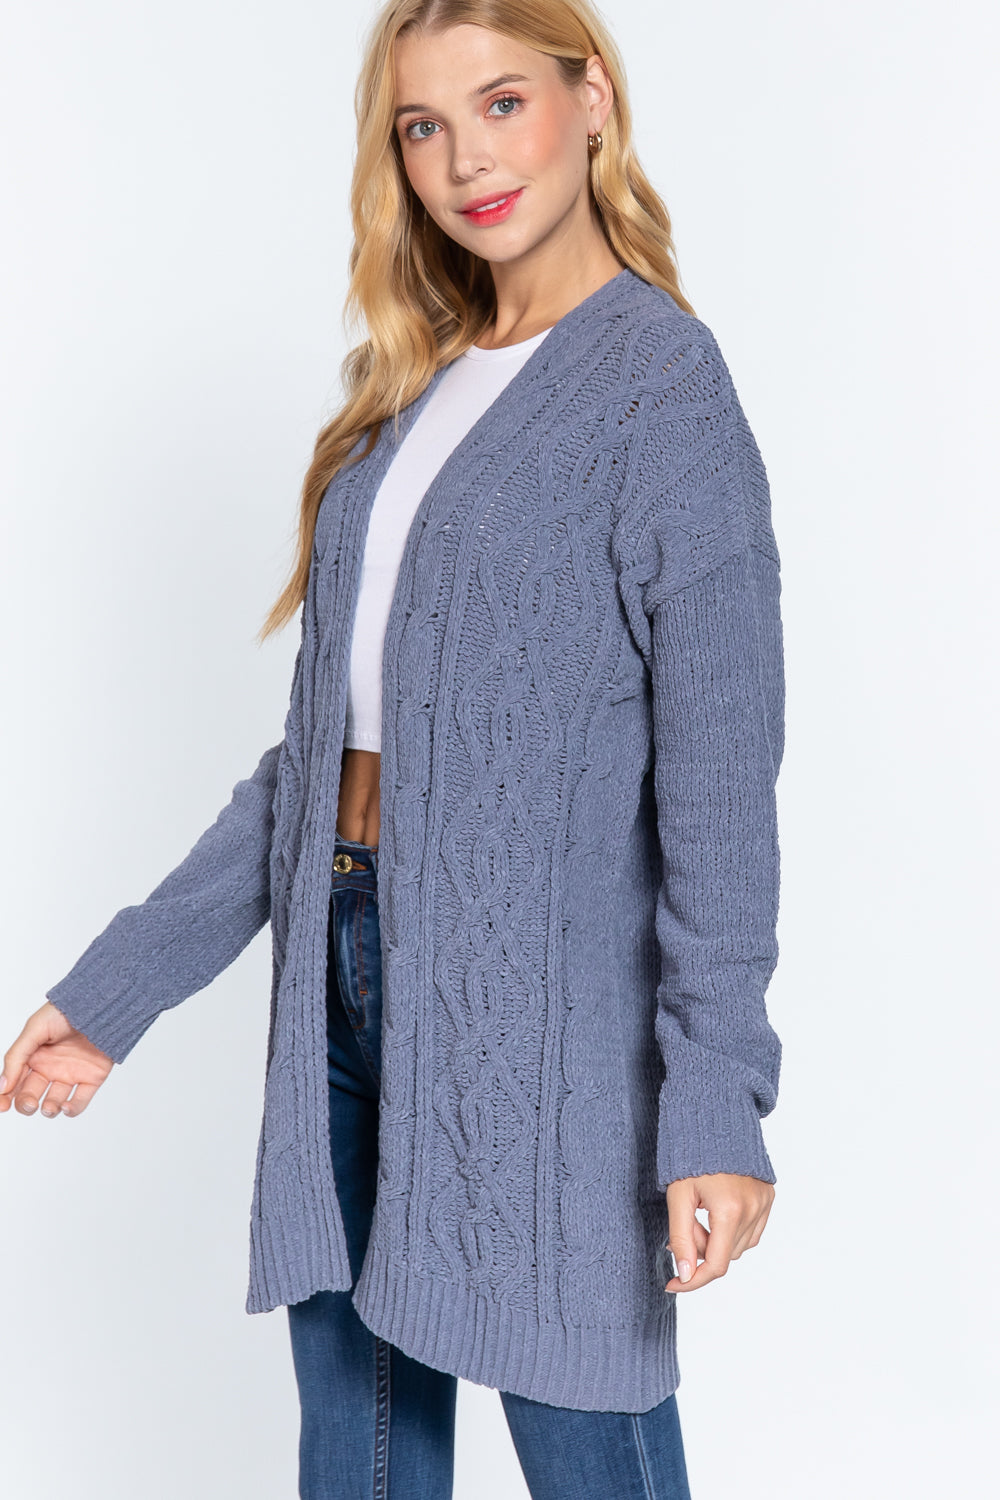 Greyish Blue Chenille Long Sleeve Sweater Cardigan ccw